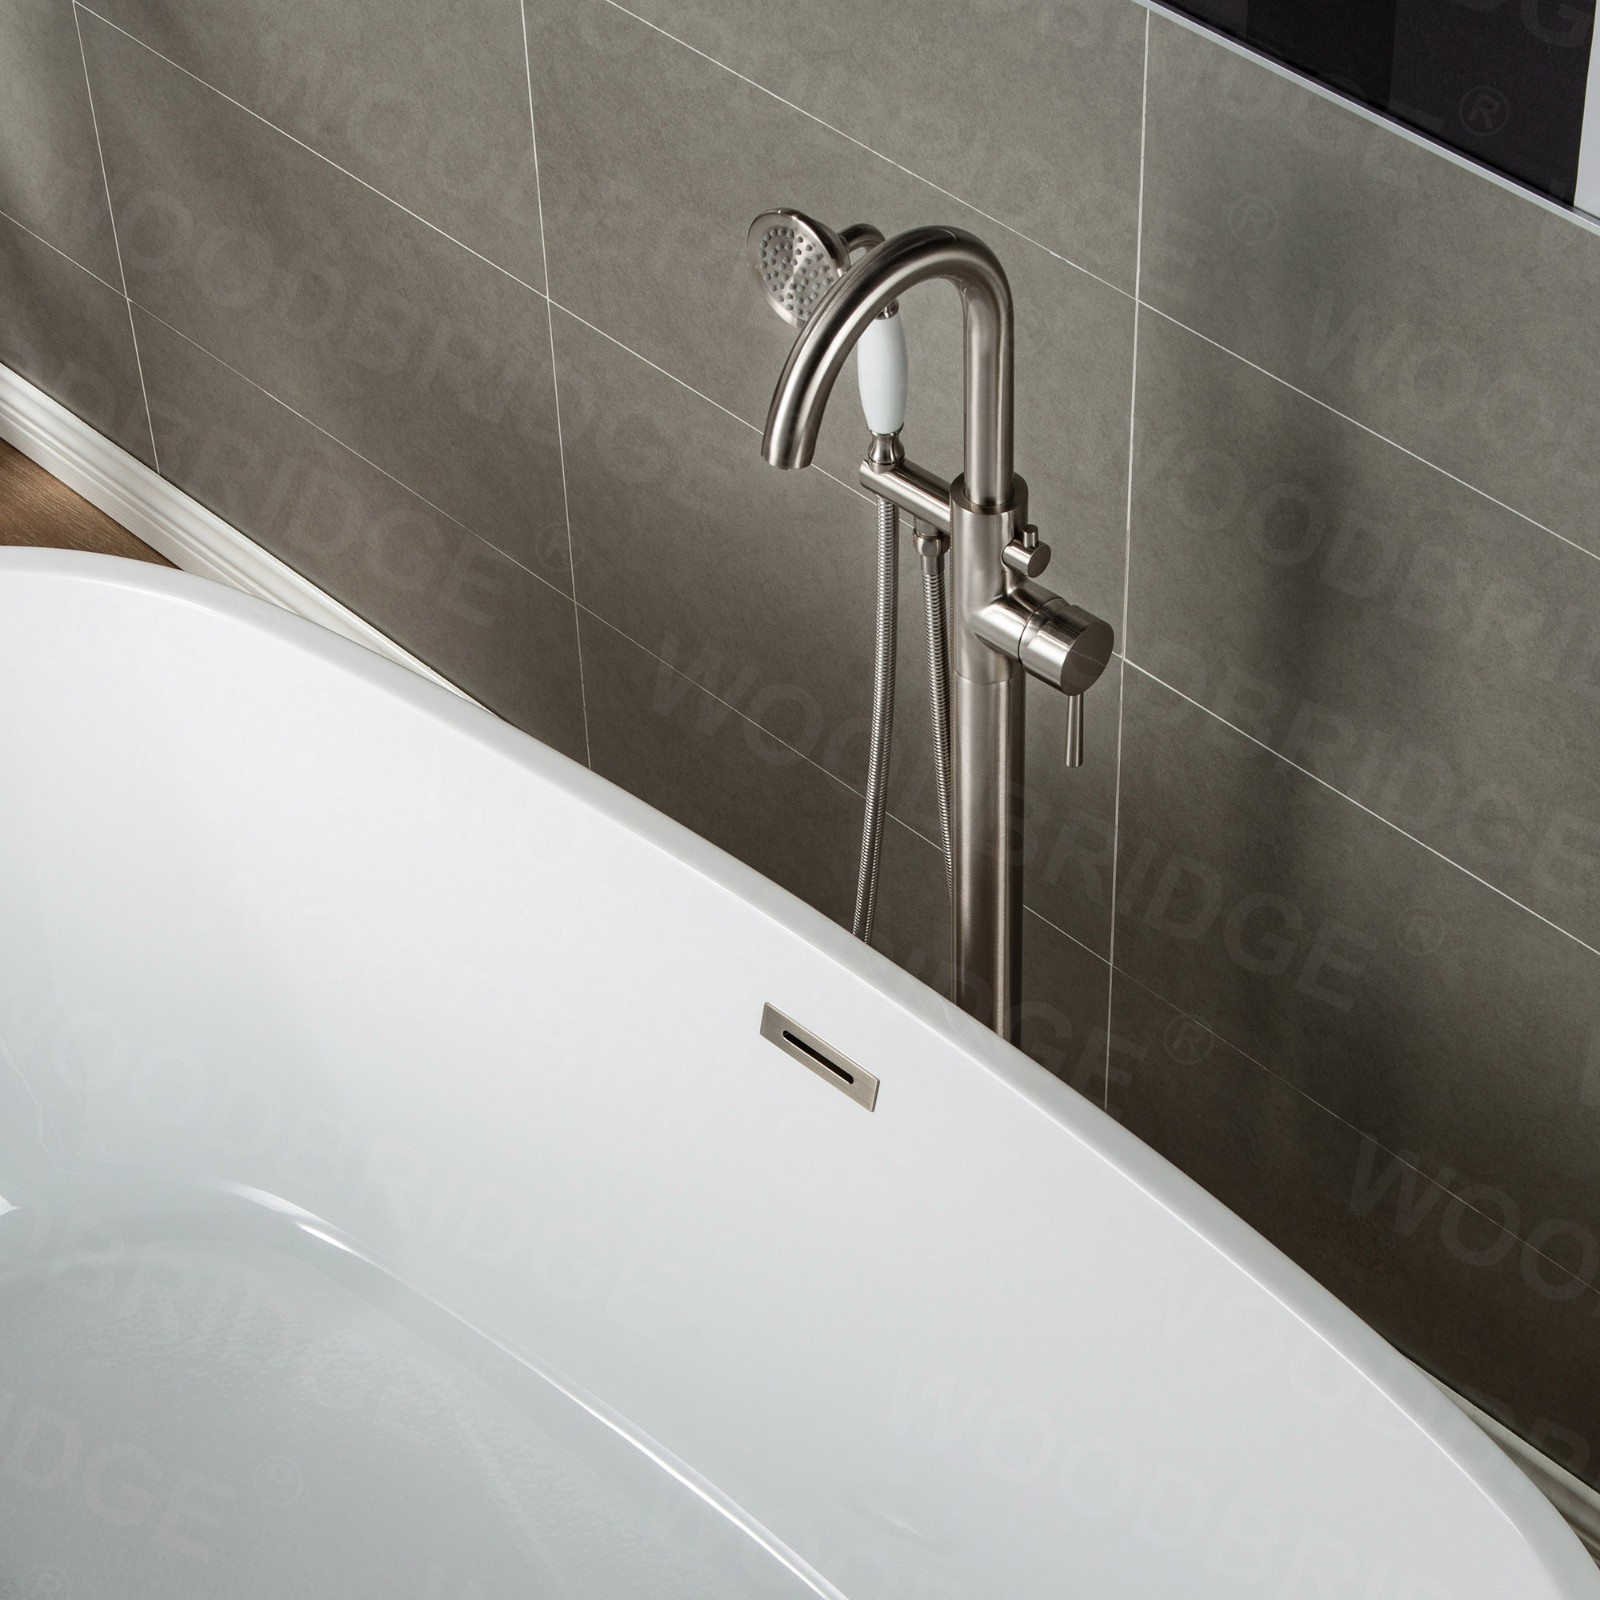  WOODBRIDGE WOODBRIDGEE F0001BNVT Contemporary Single Handle Floor Mount Freestanding Tub Filler Faucet with Hand shower, Brushed Nickel_7883